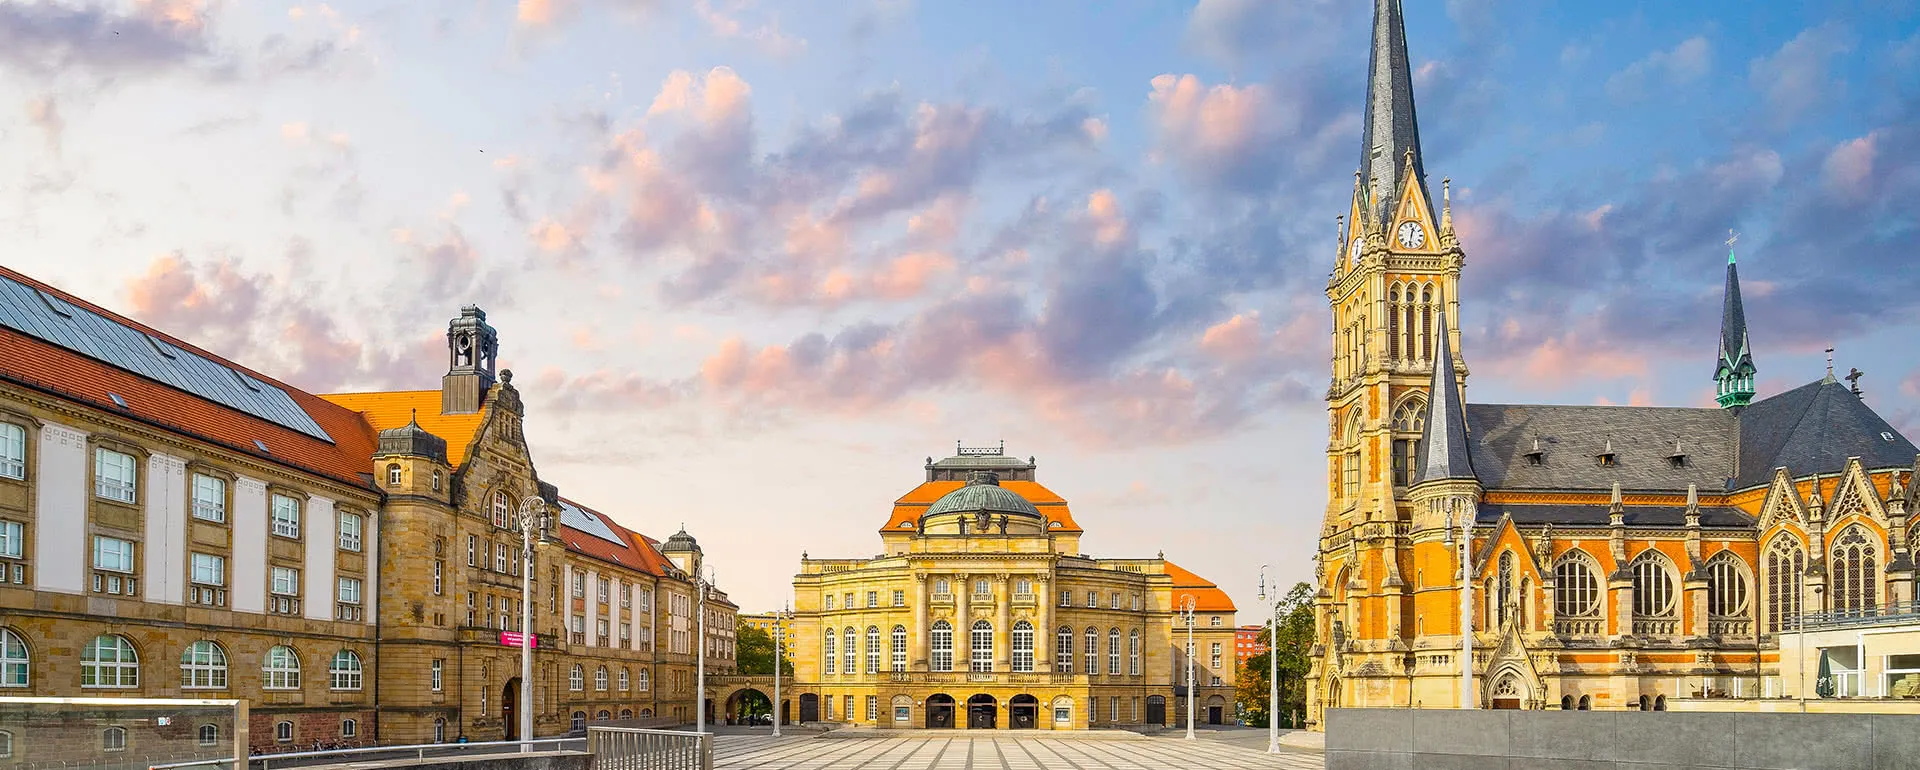 Chemnitz - the destination for business travel